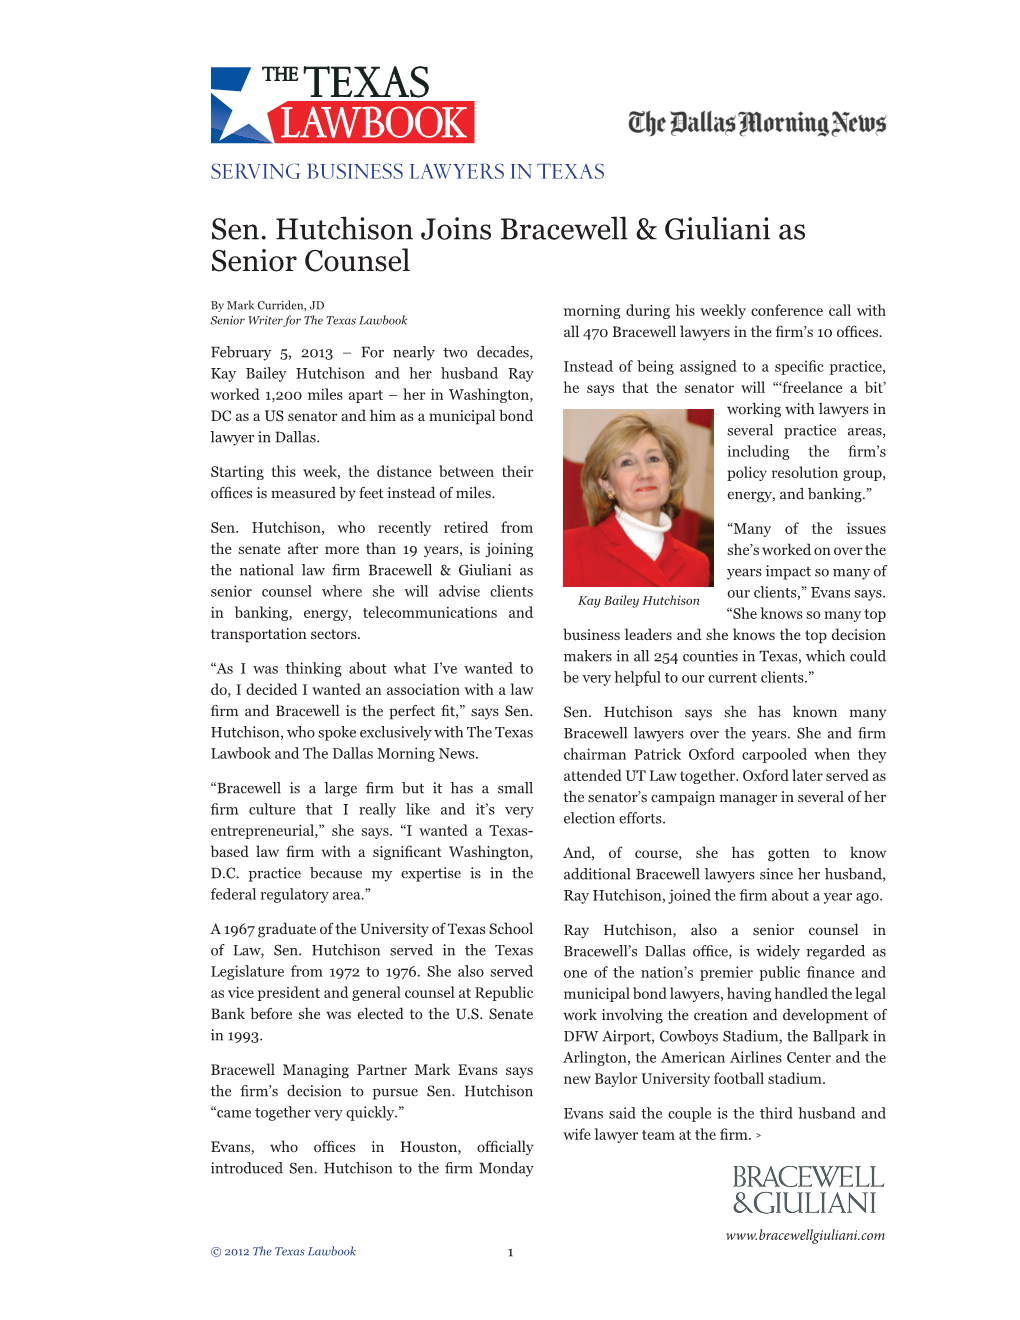 Sen. Hutchison Joins Bracewell & Giuliani As Senior Counsel